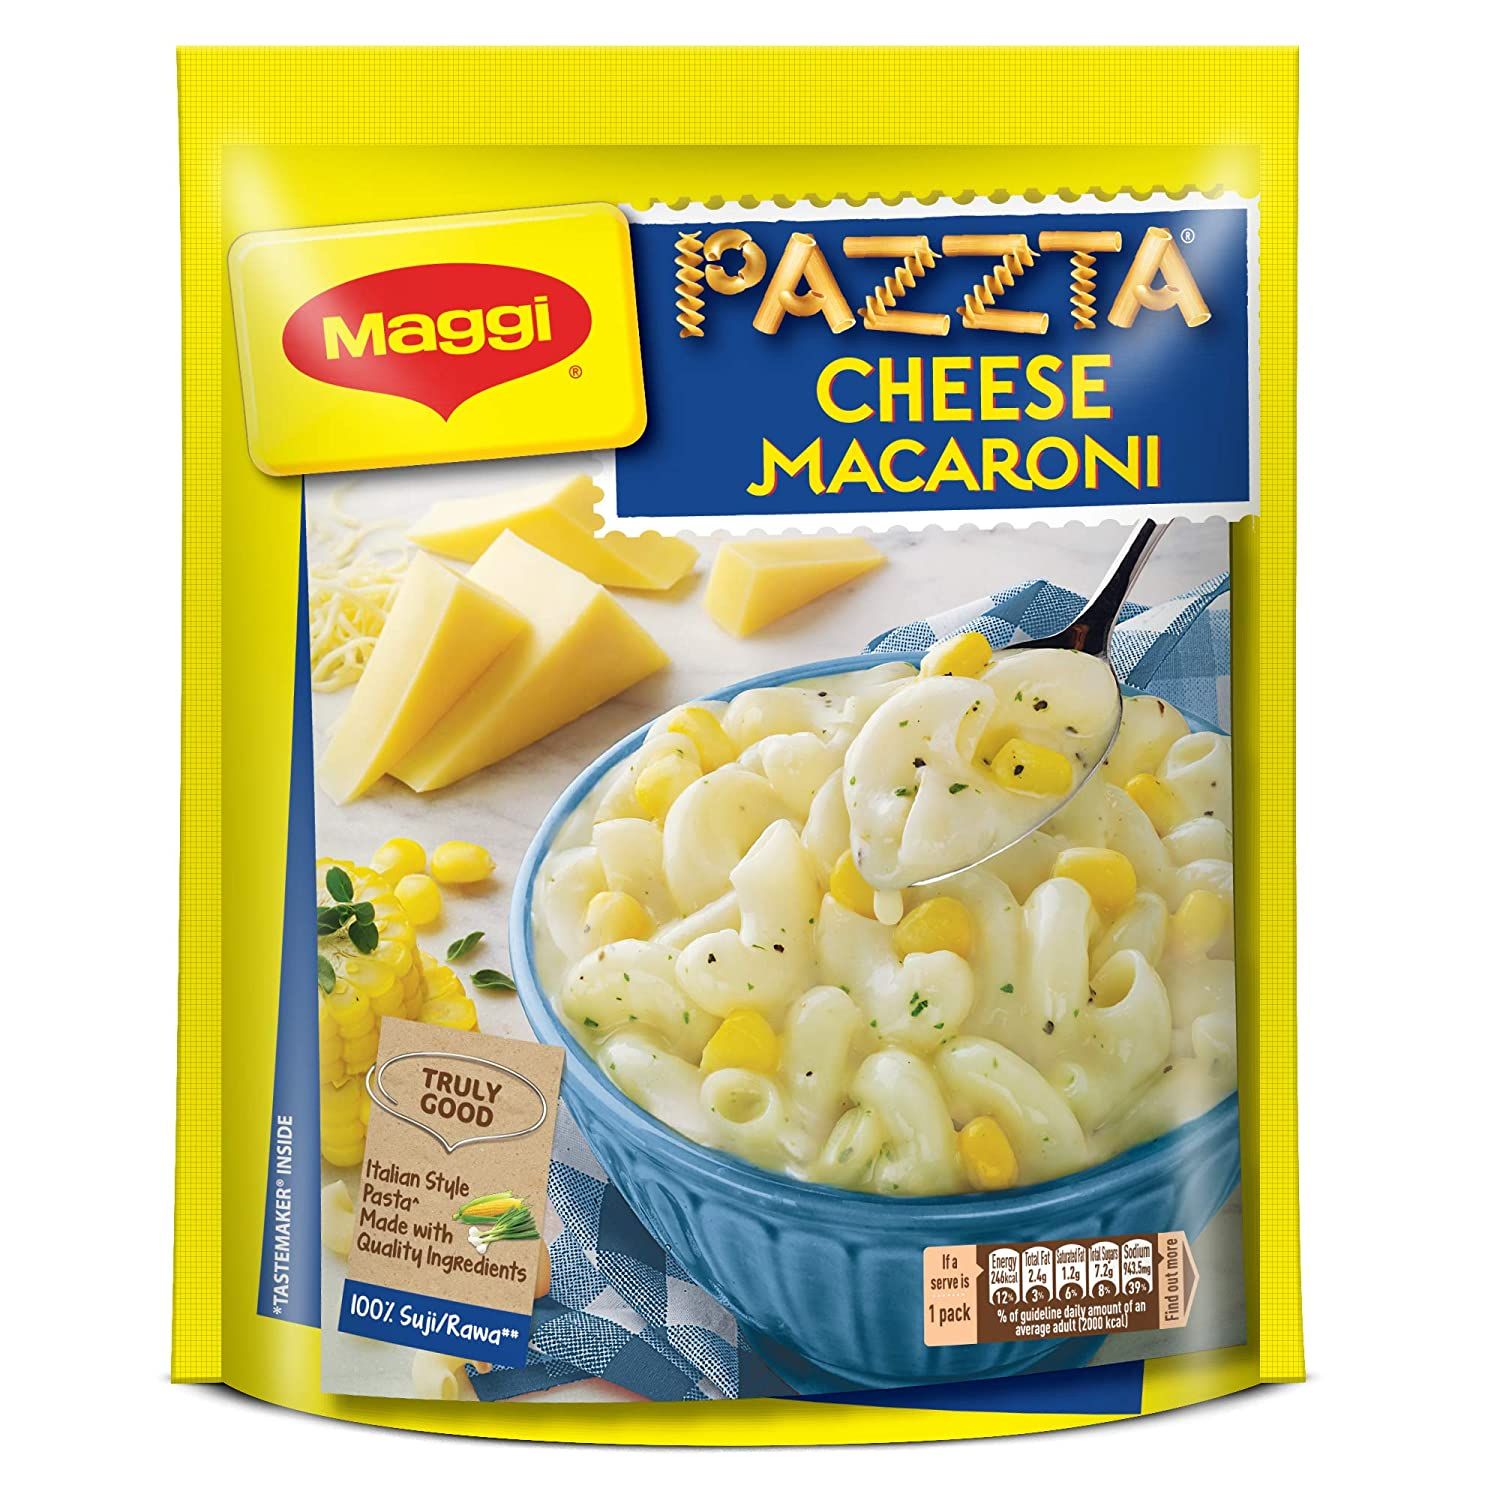 Maggi Pazzta Instant Pasta Cheese Macaroni Image